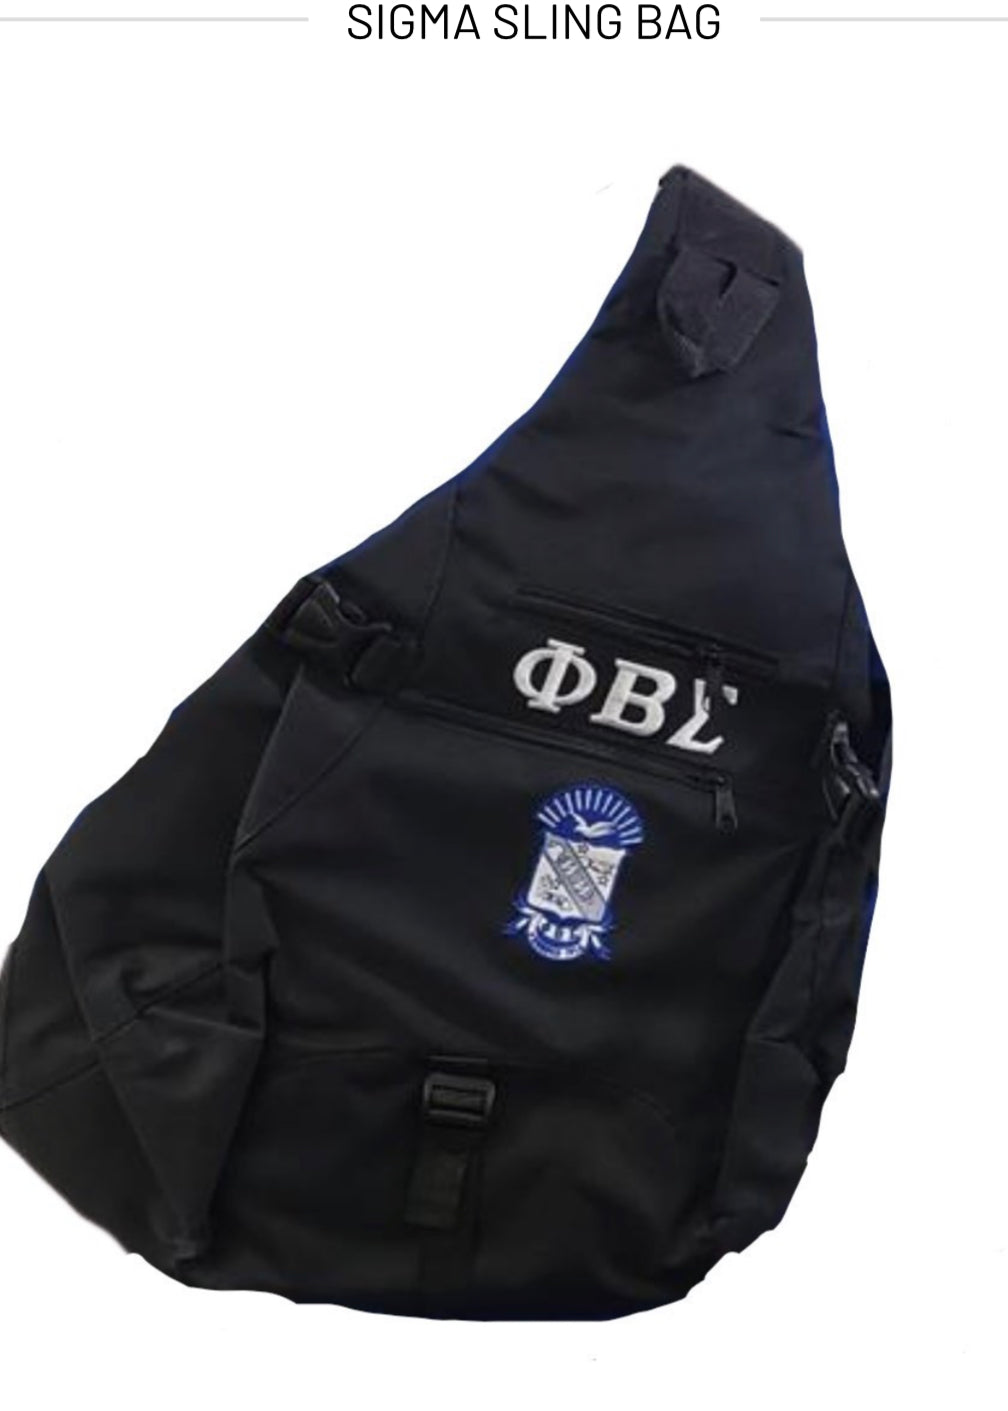 Phi Beta Sigma Sling Bag